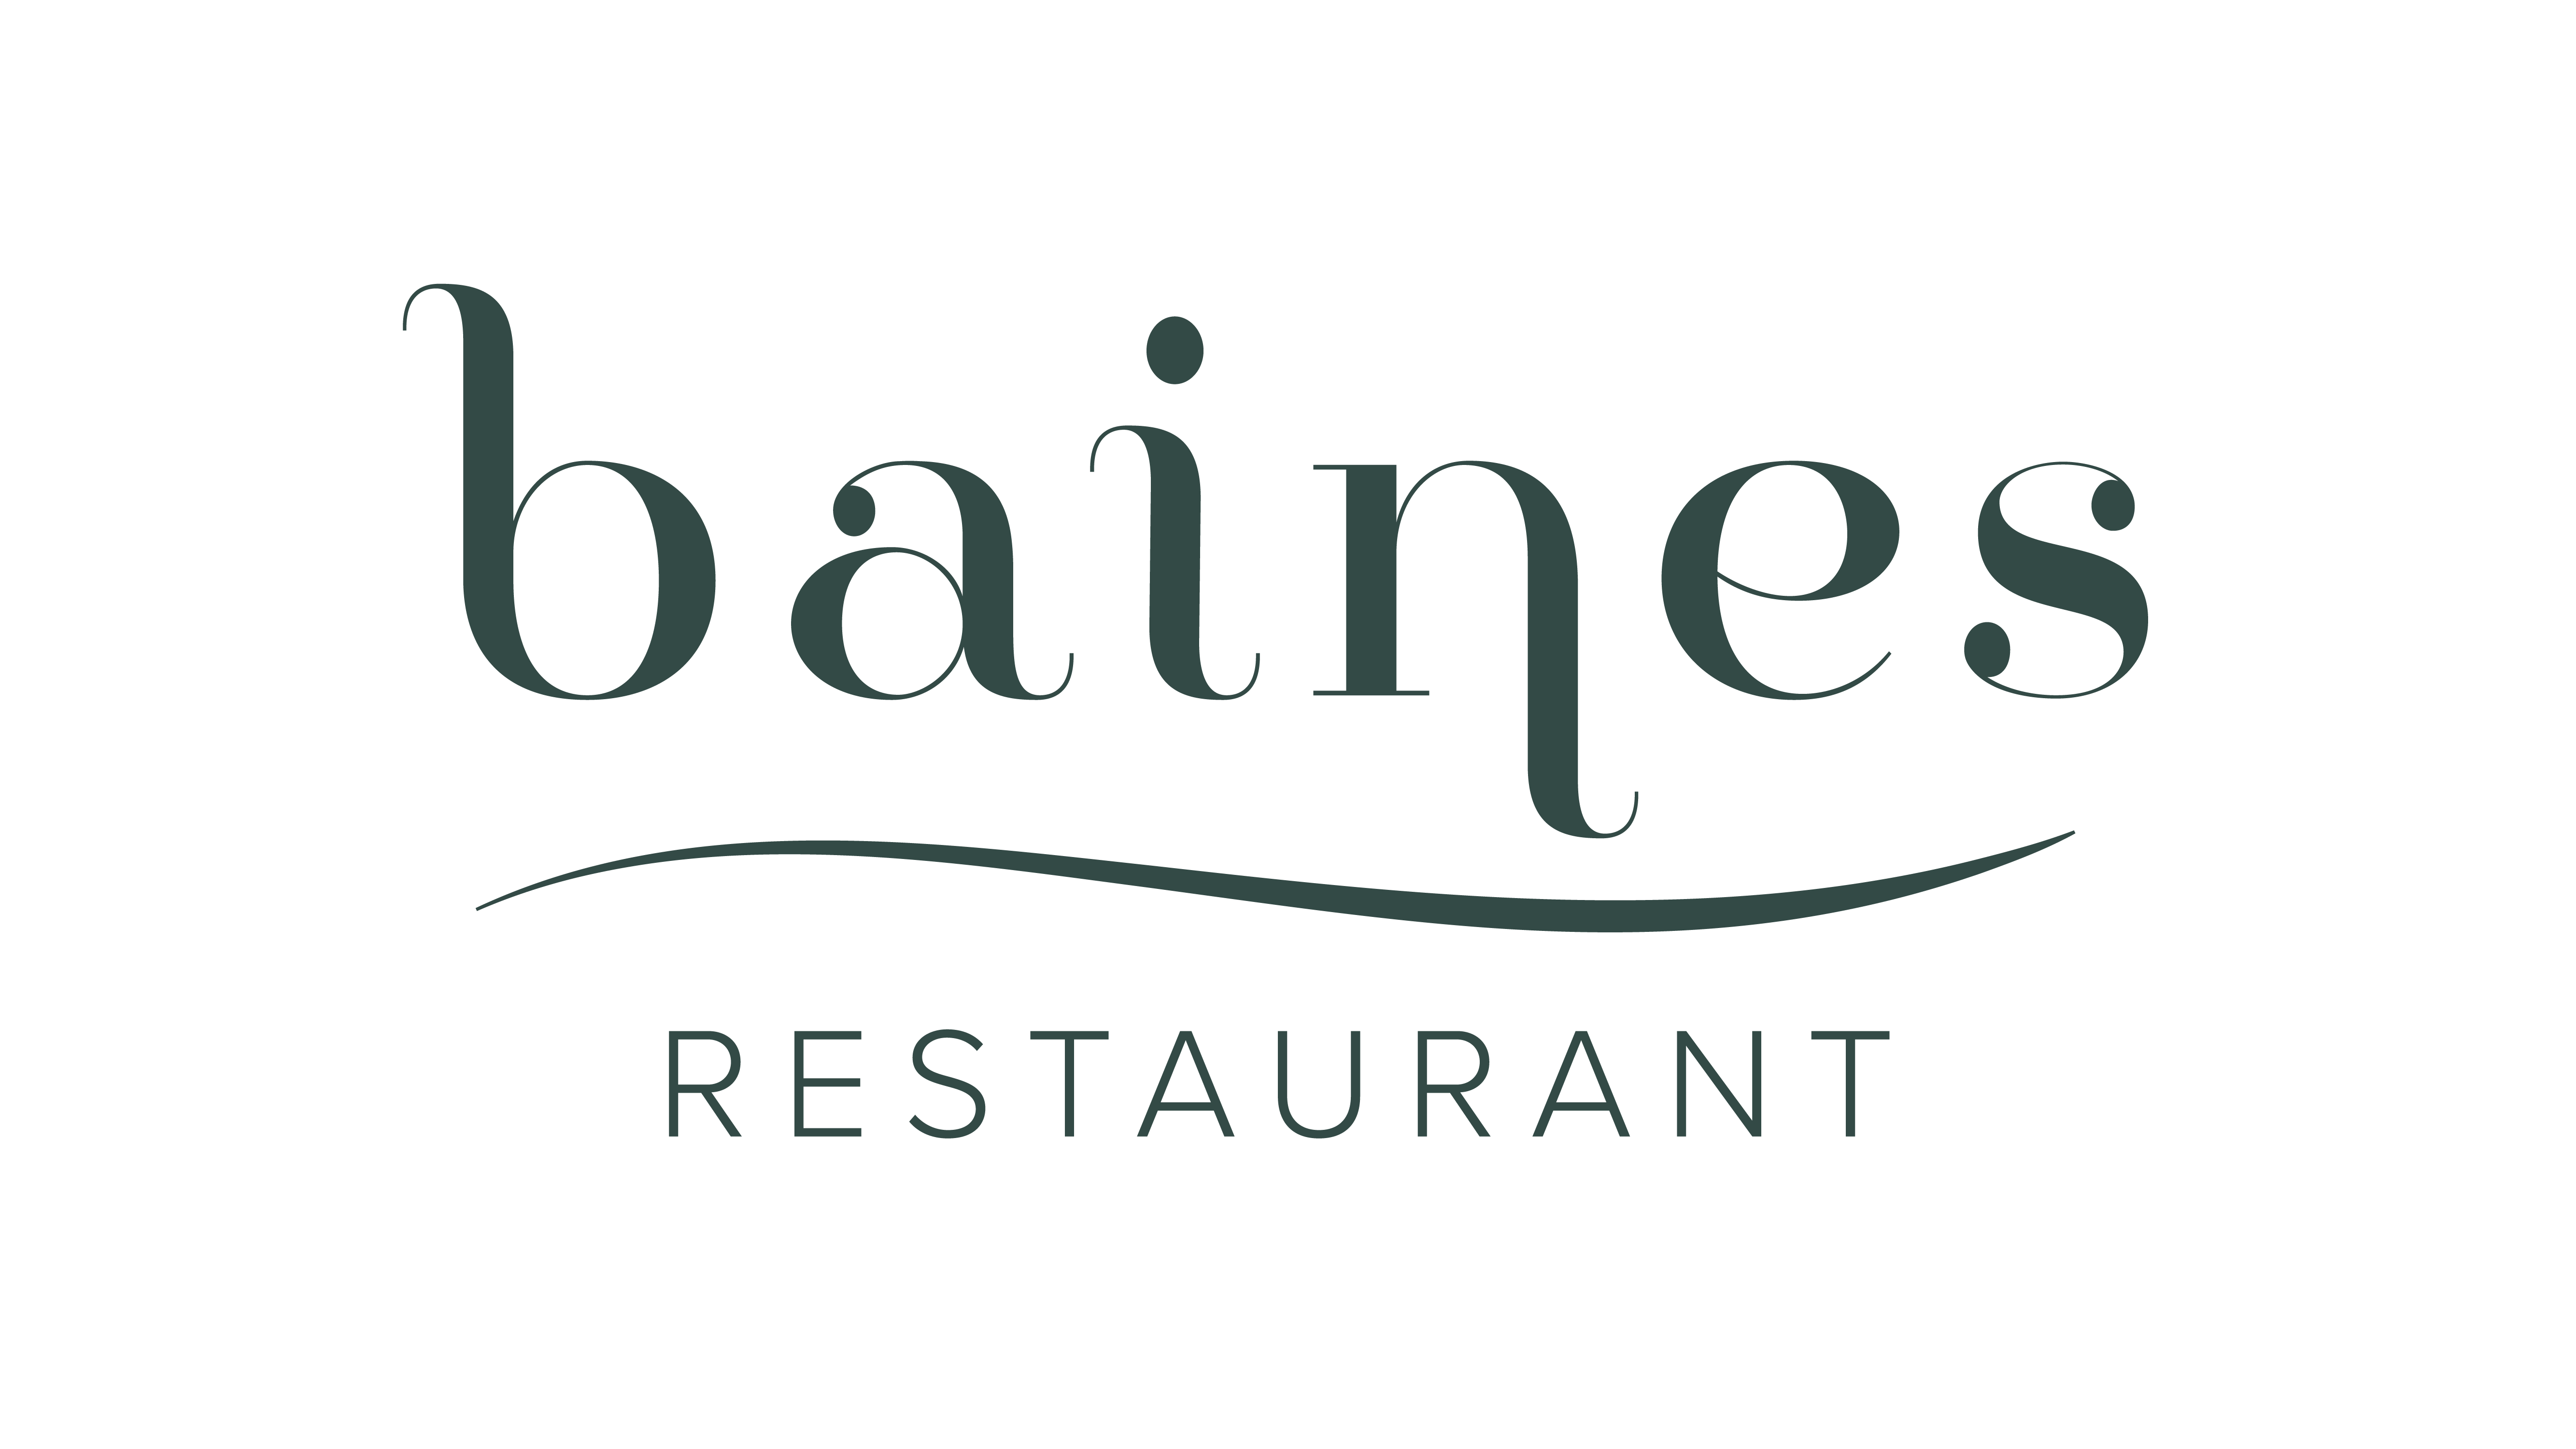 Baines Logo